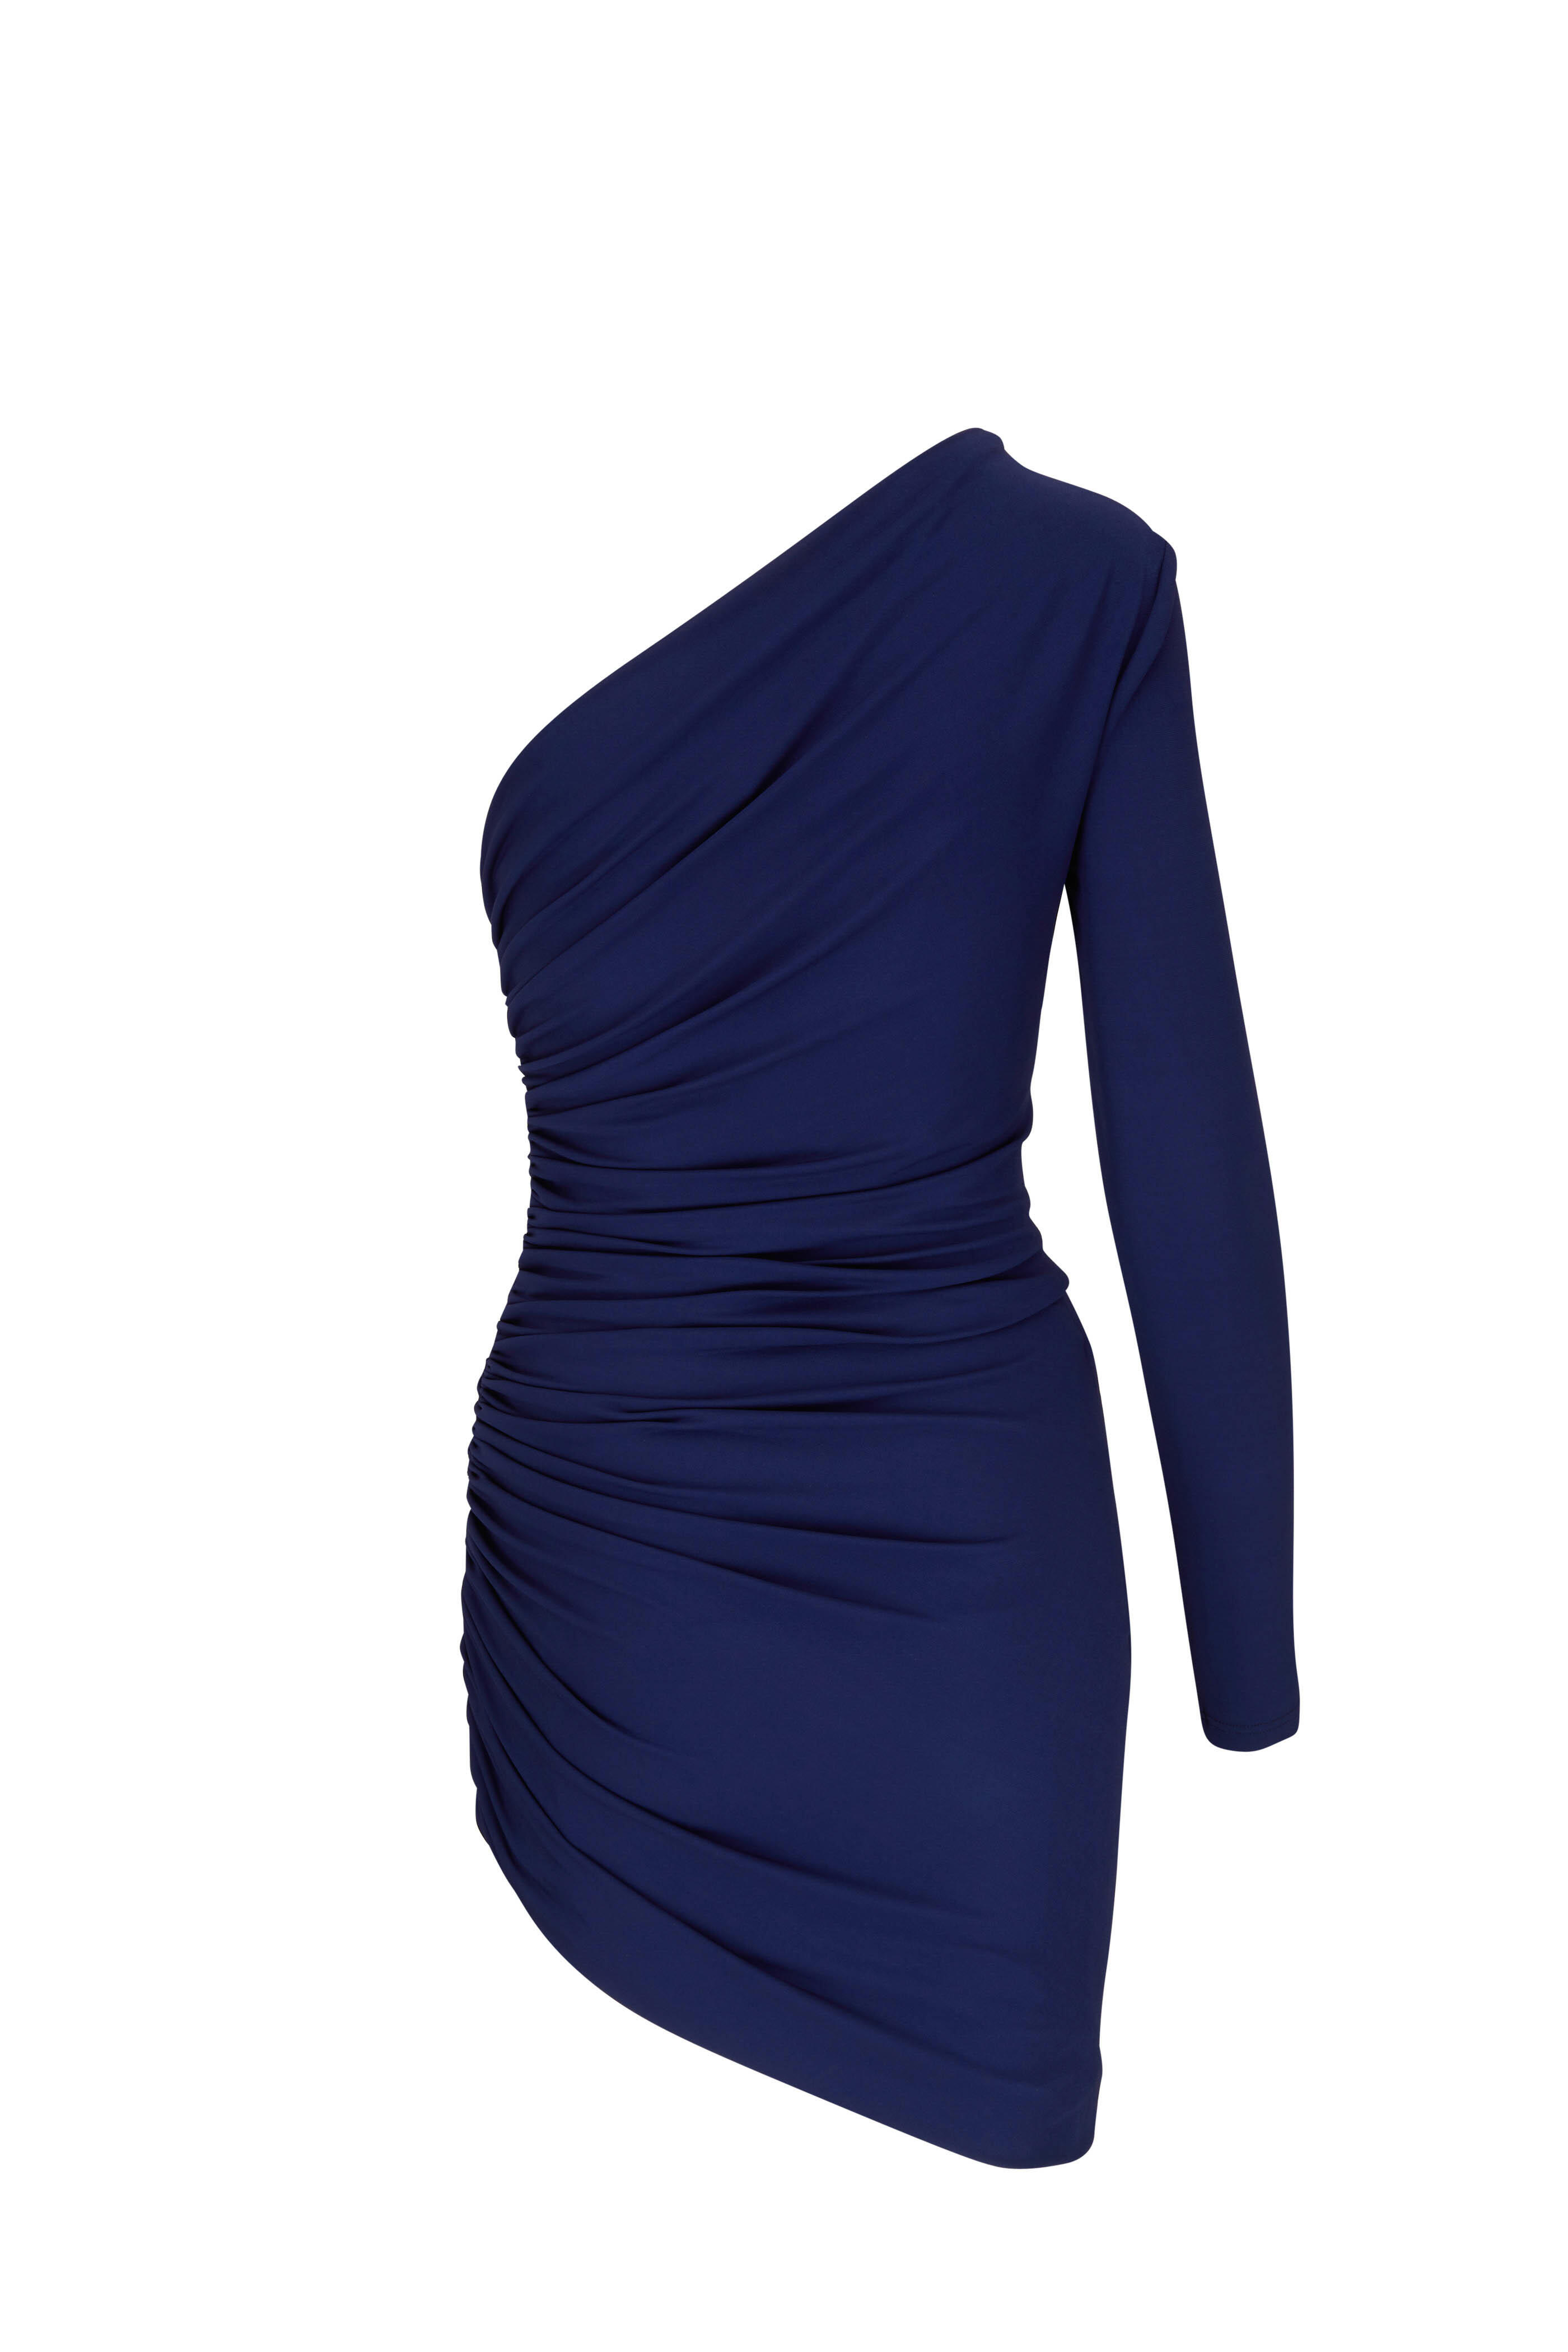 Michael Kors Collection - Navy Blue Ruched One Shoulder Dress